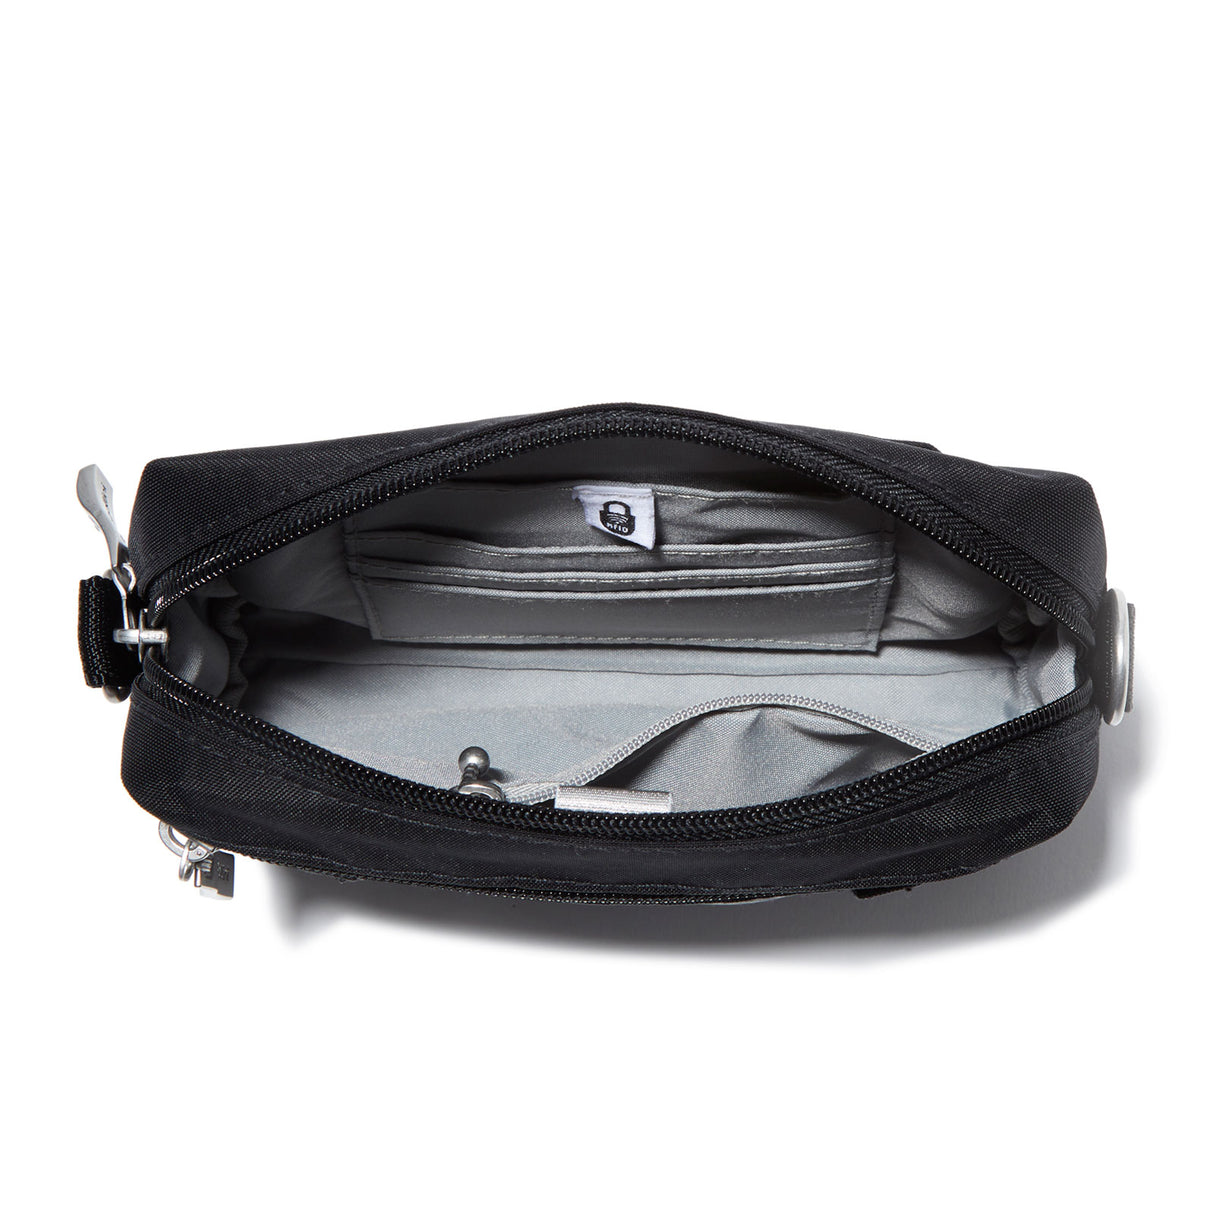 Baggallini 2-in-1 Convertible Belt Bag - Black Accessories - Bags - Handbags - The Heel Shoe Fitters